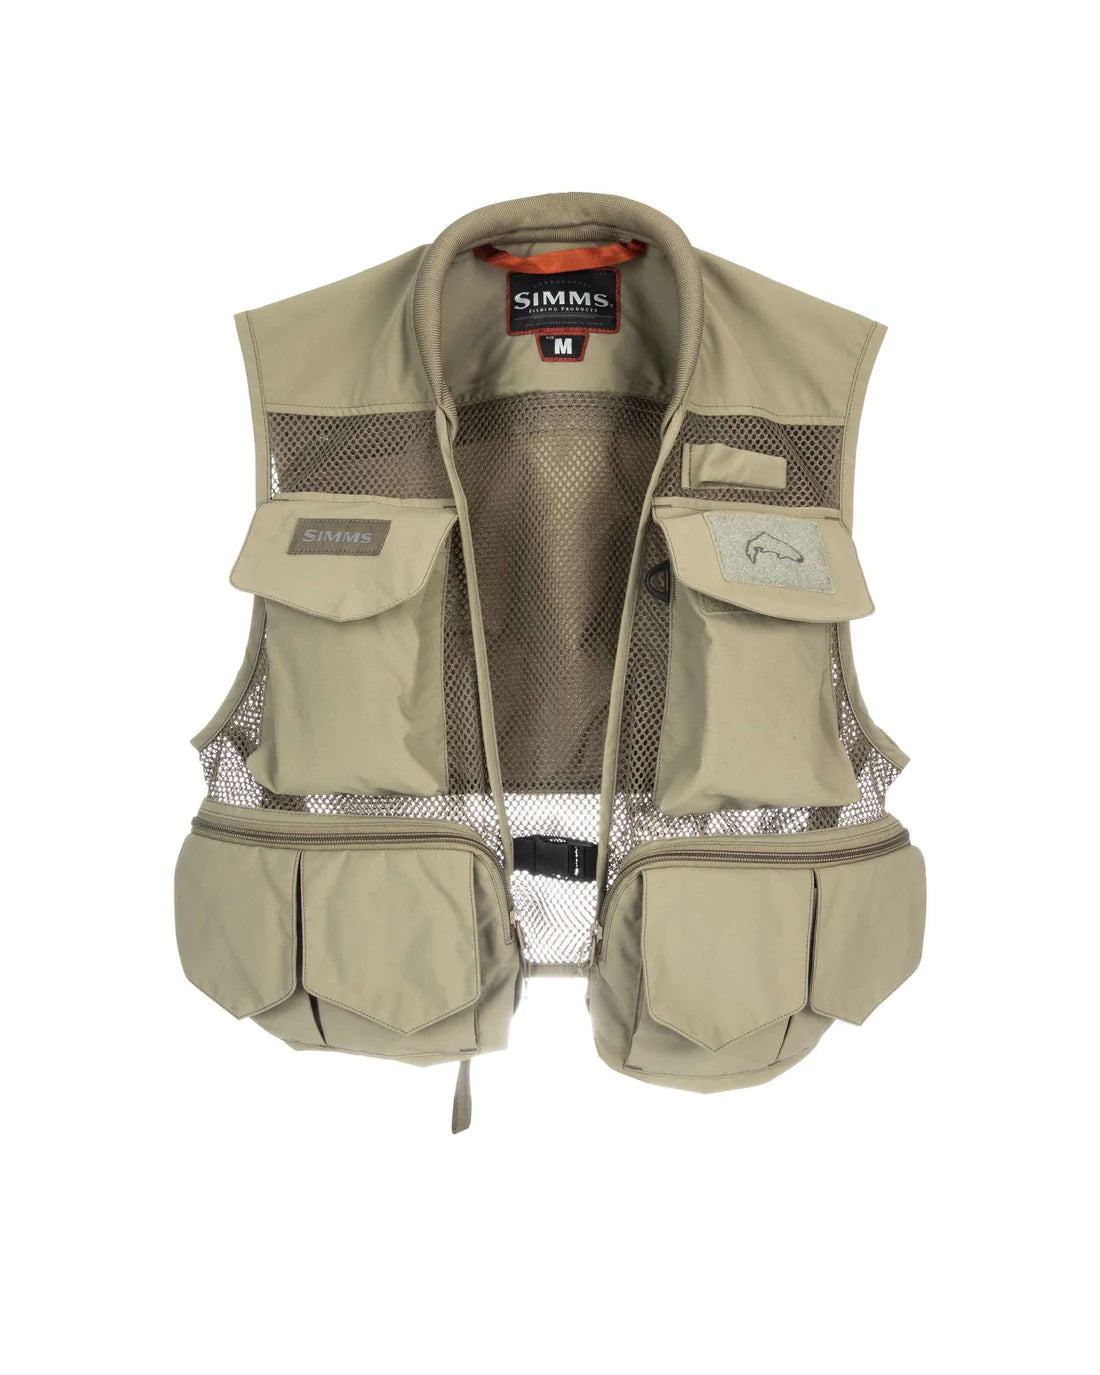 fishpond Sagebrush Pro Men's Mesh Fly Fishing Vest, Sagebrush, One